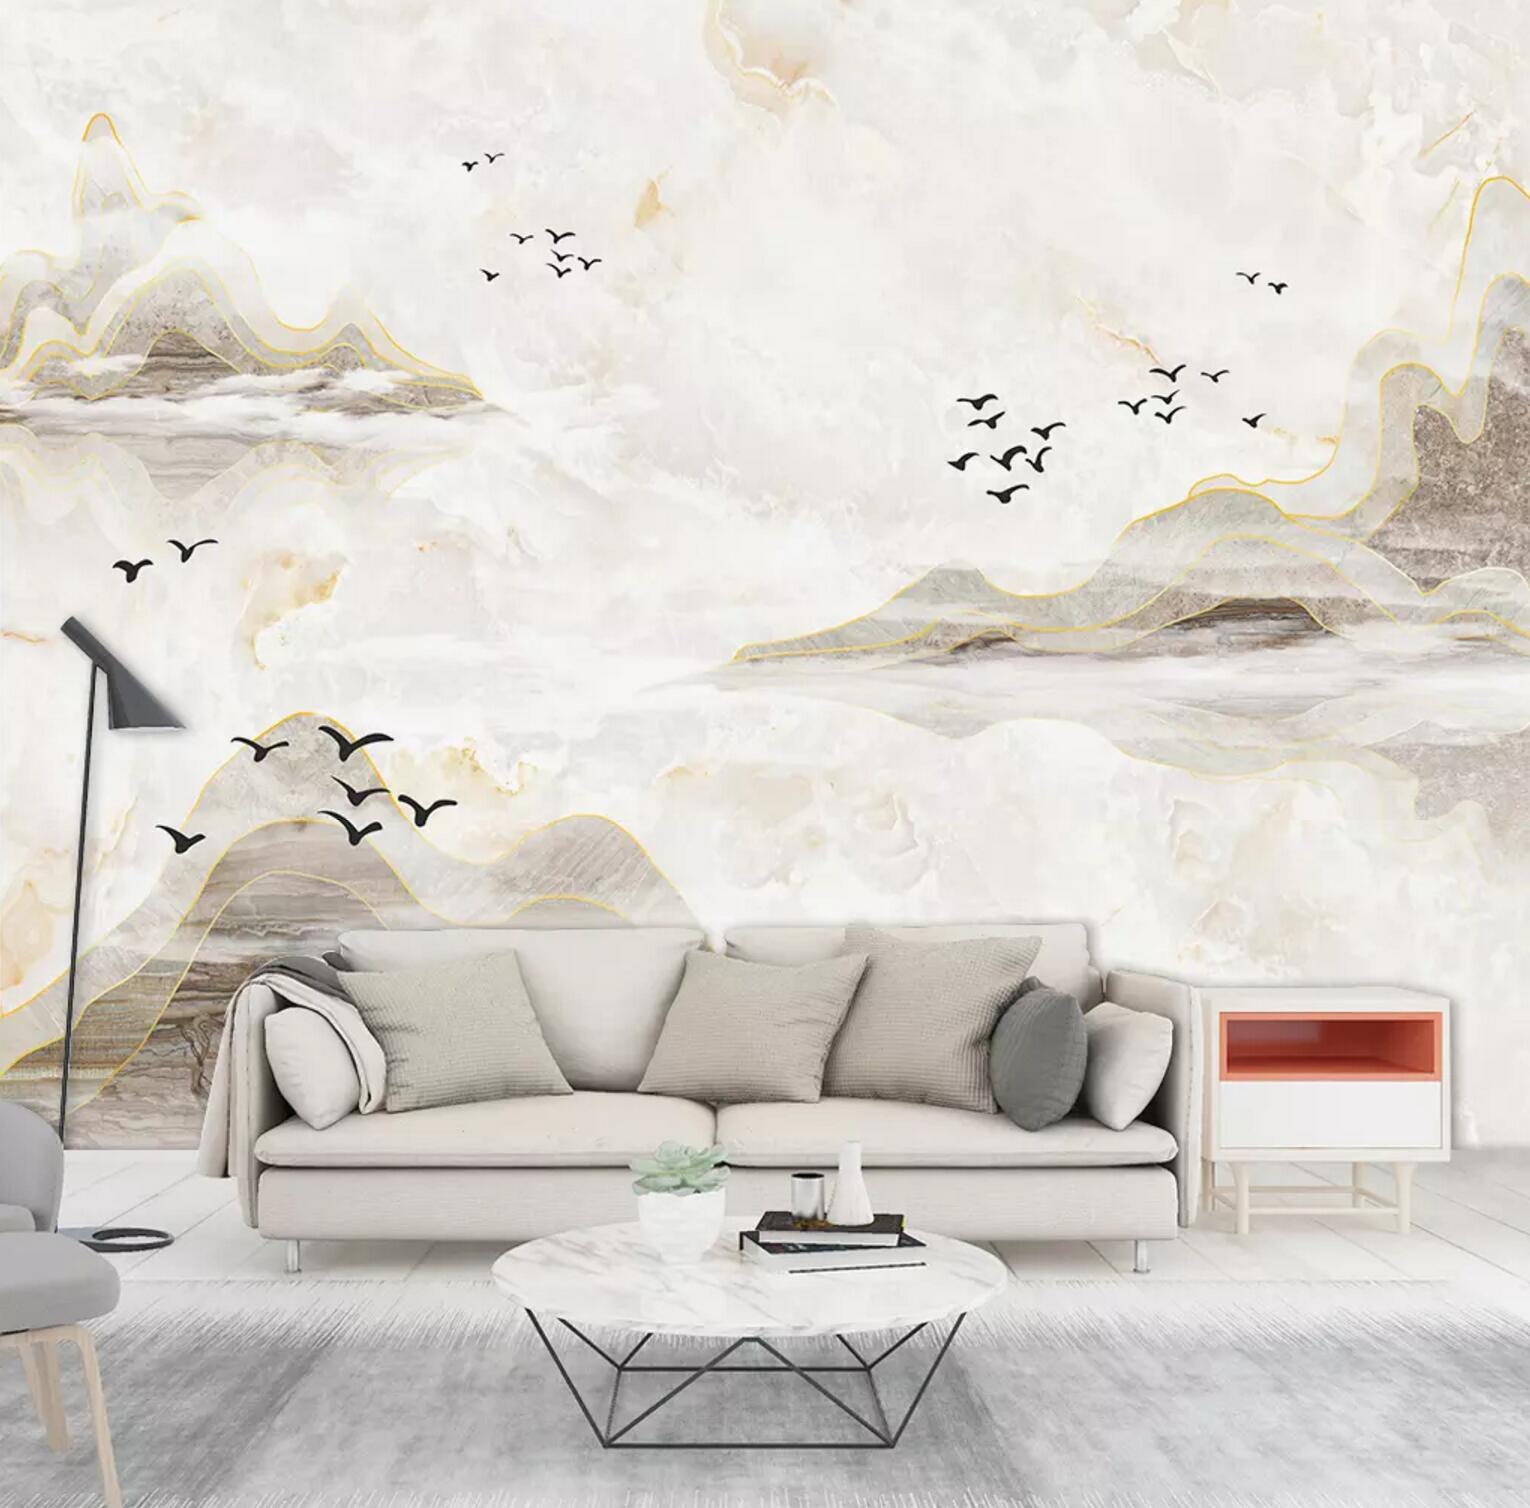 3D landscape painting background wall mural wallpaper 488- Jess Art Decoration